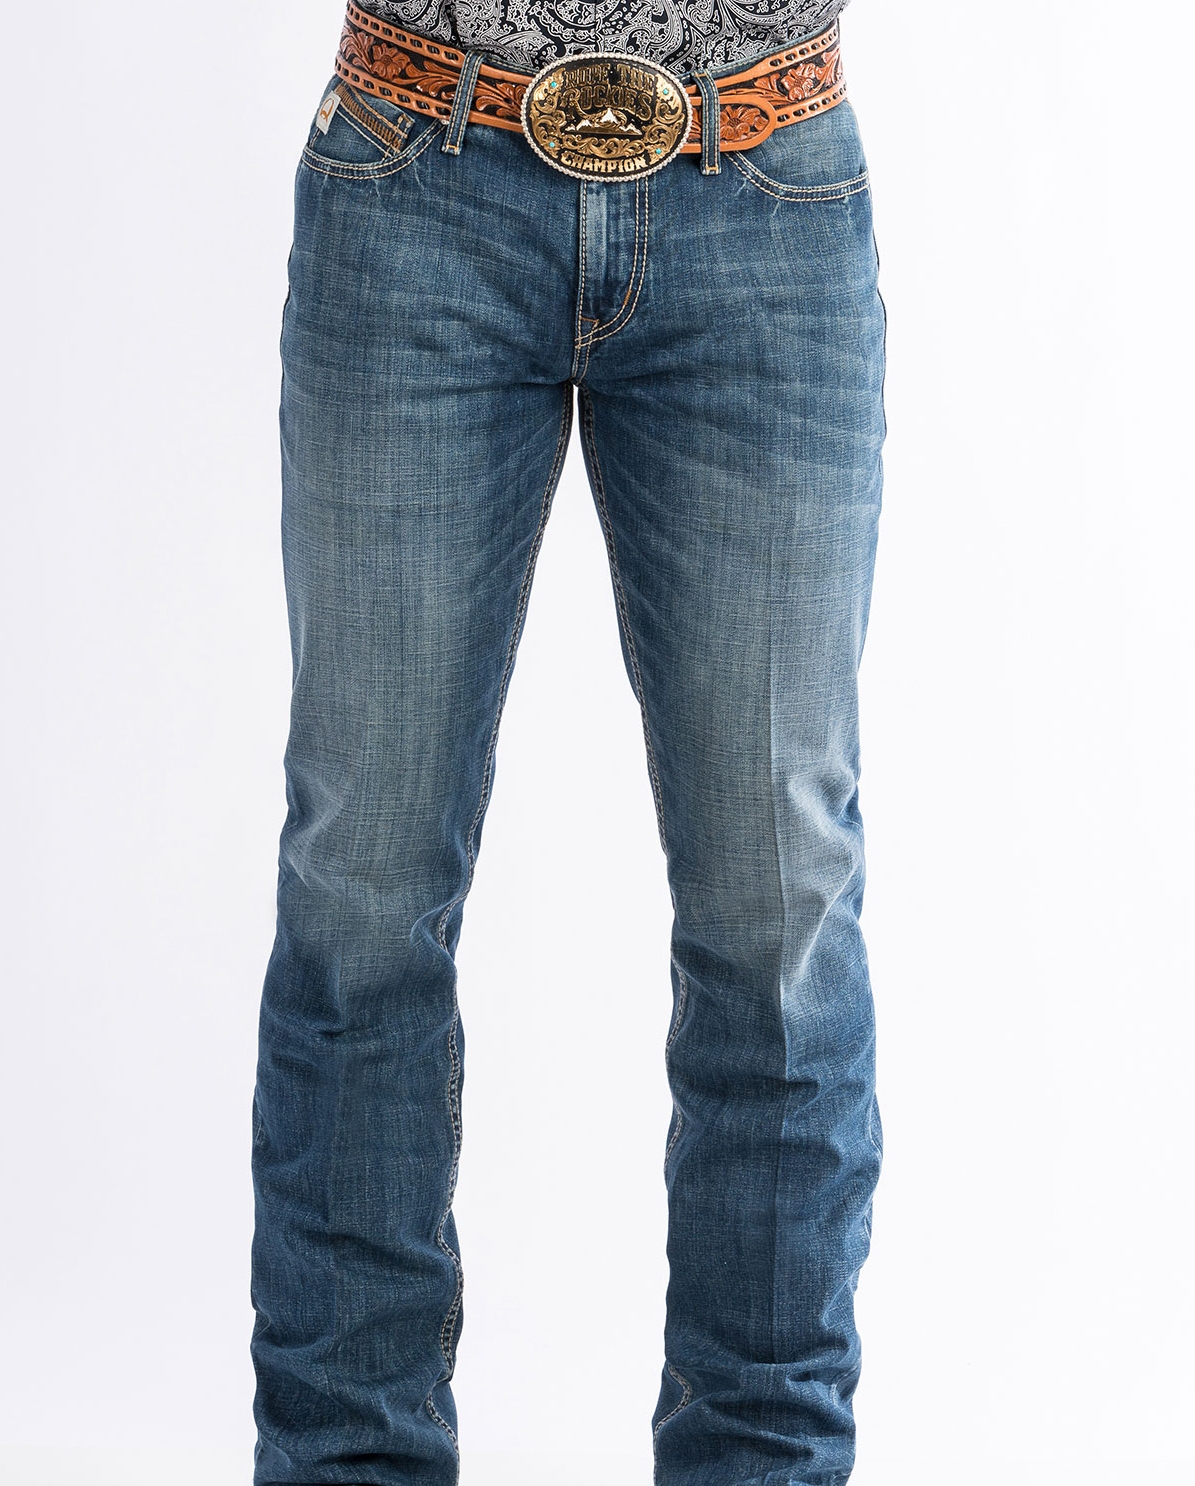 cinch slim bootcut jeans